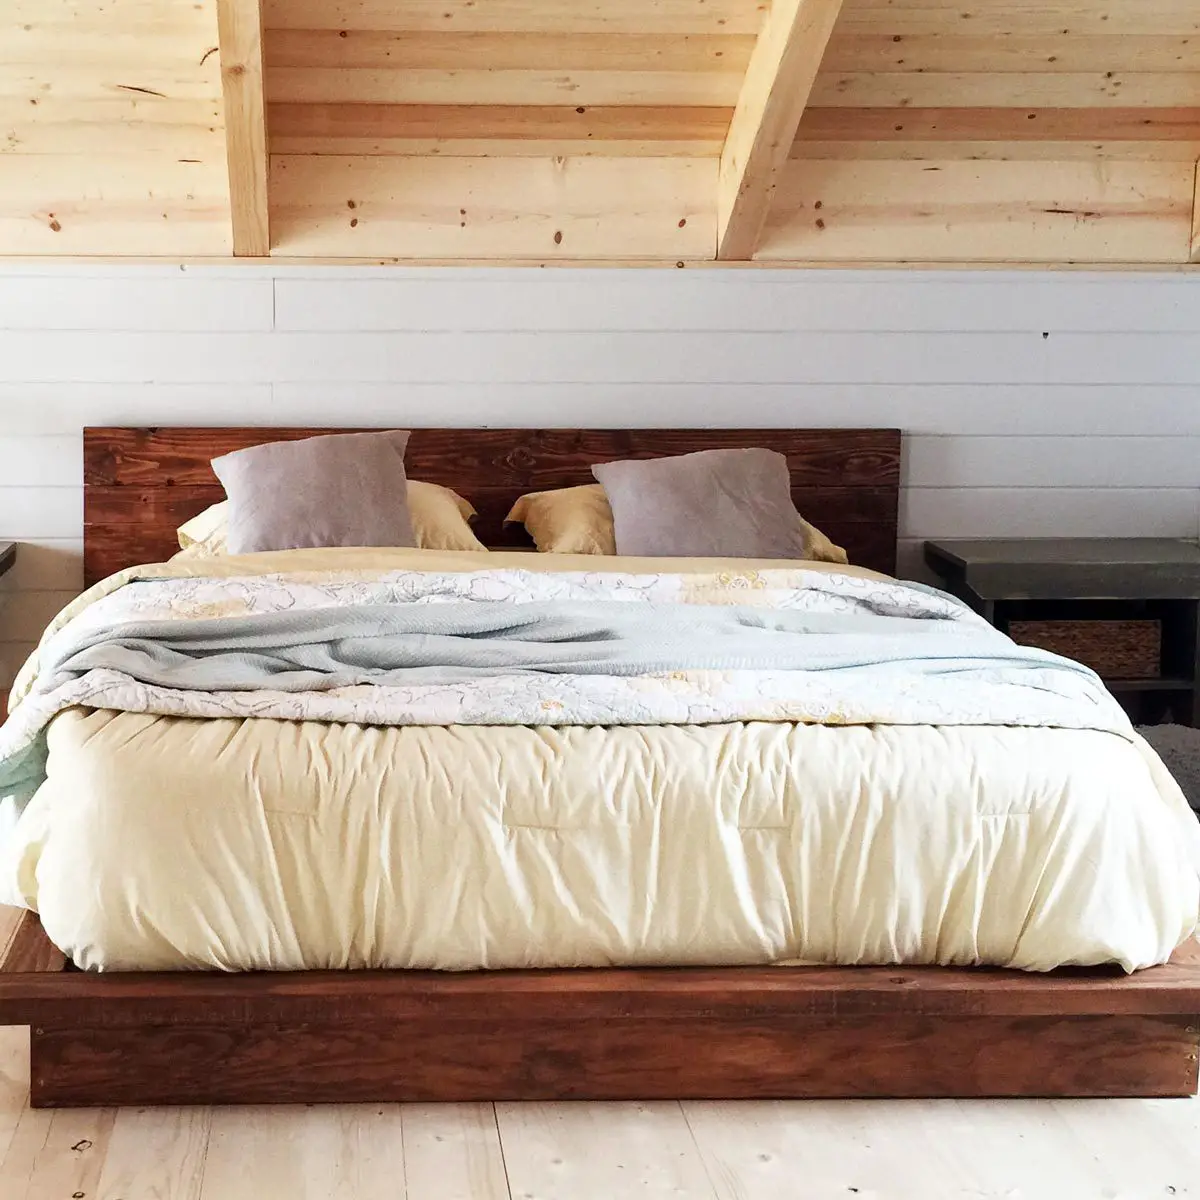 10 Awesome DIY Platform Bed Designs â The Family Handyman